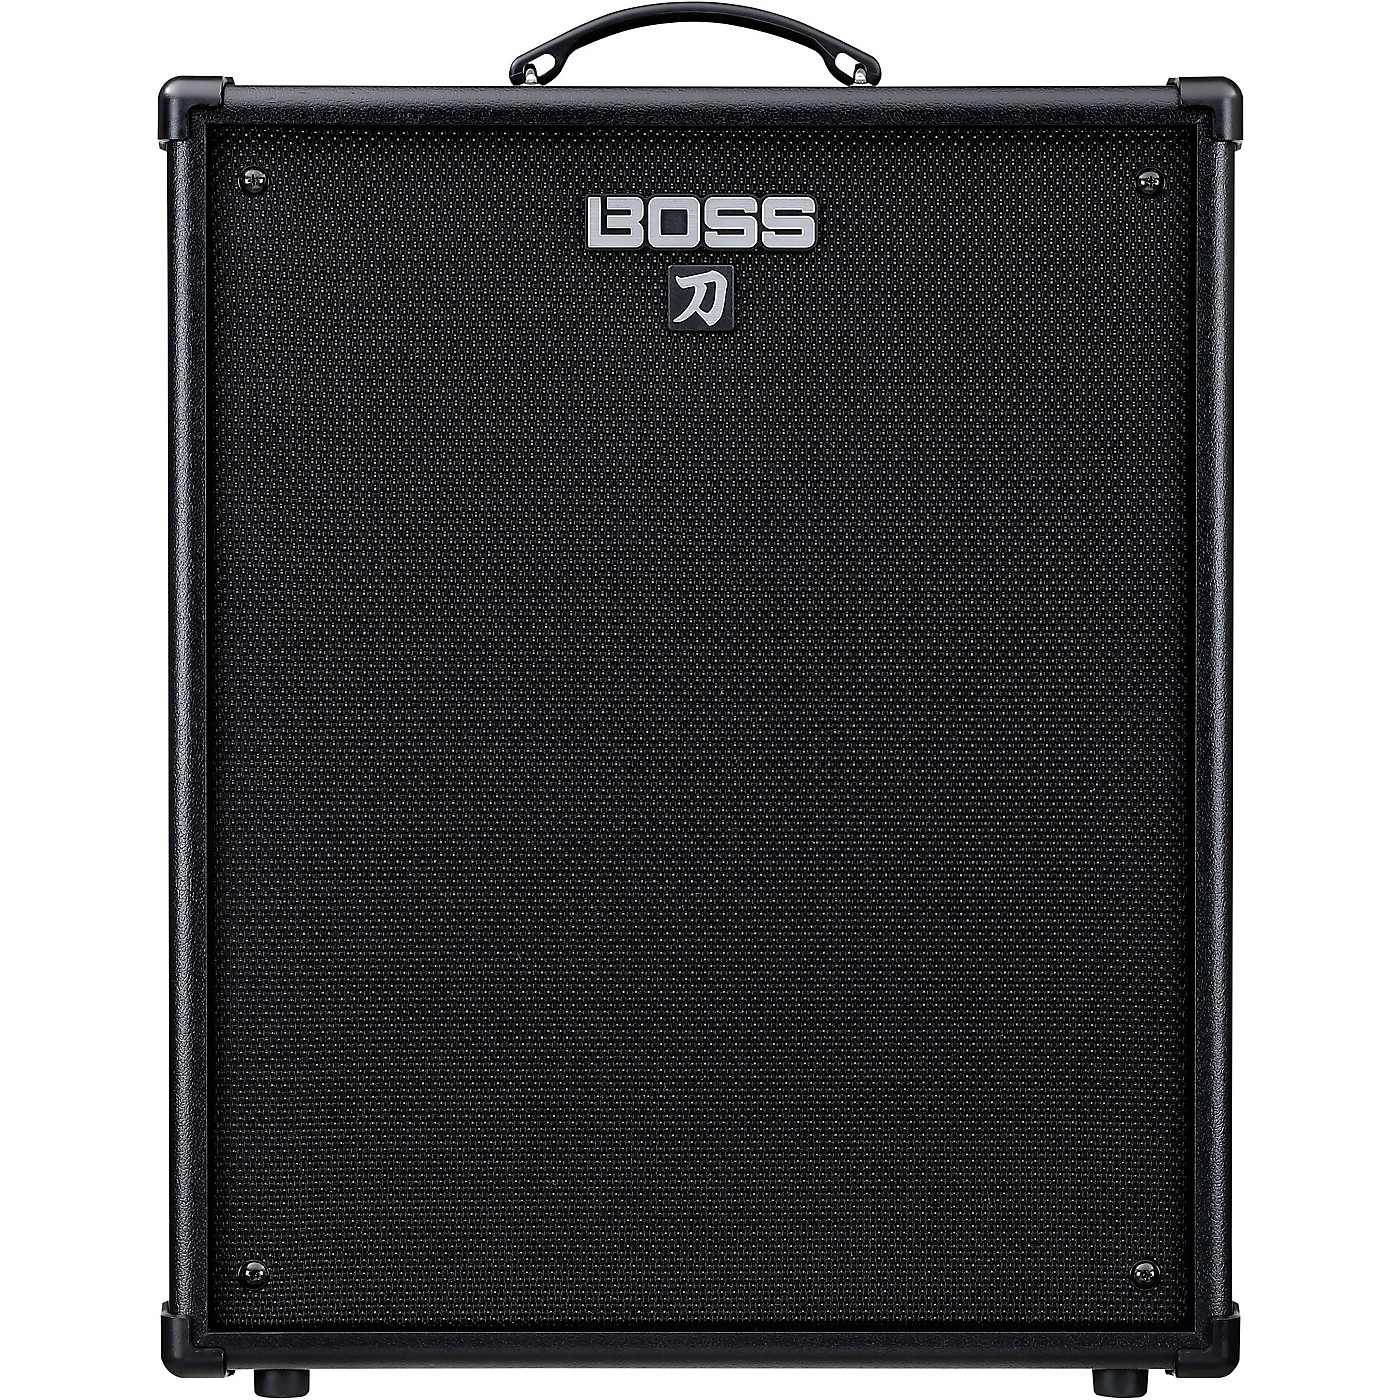 BOSS Katana-210 160W 2x10 Bass Combo Amp thumbnail